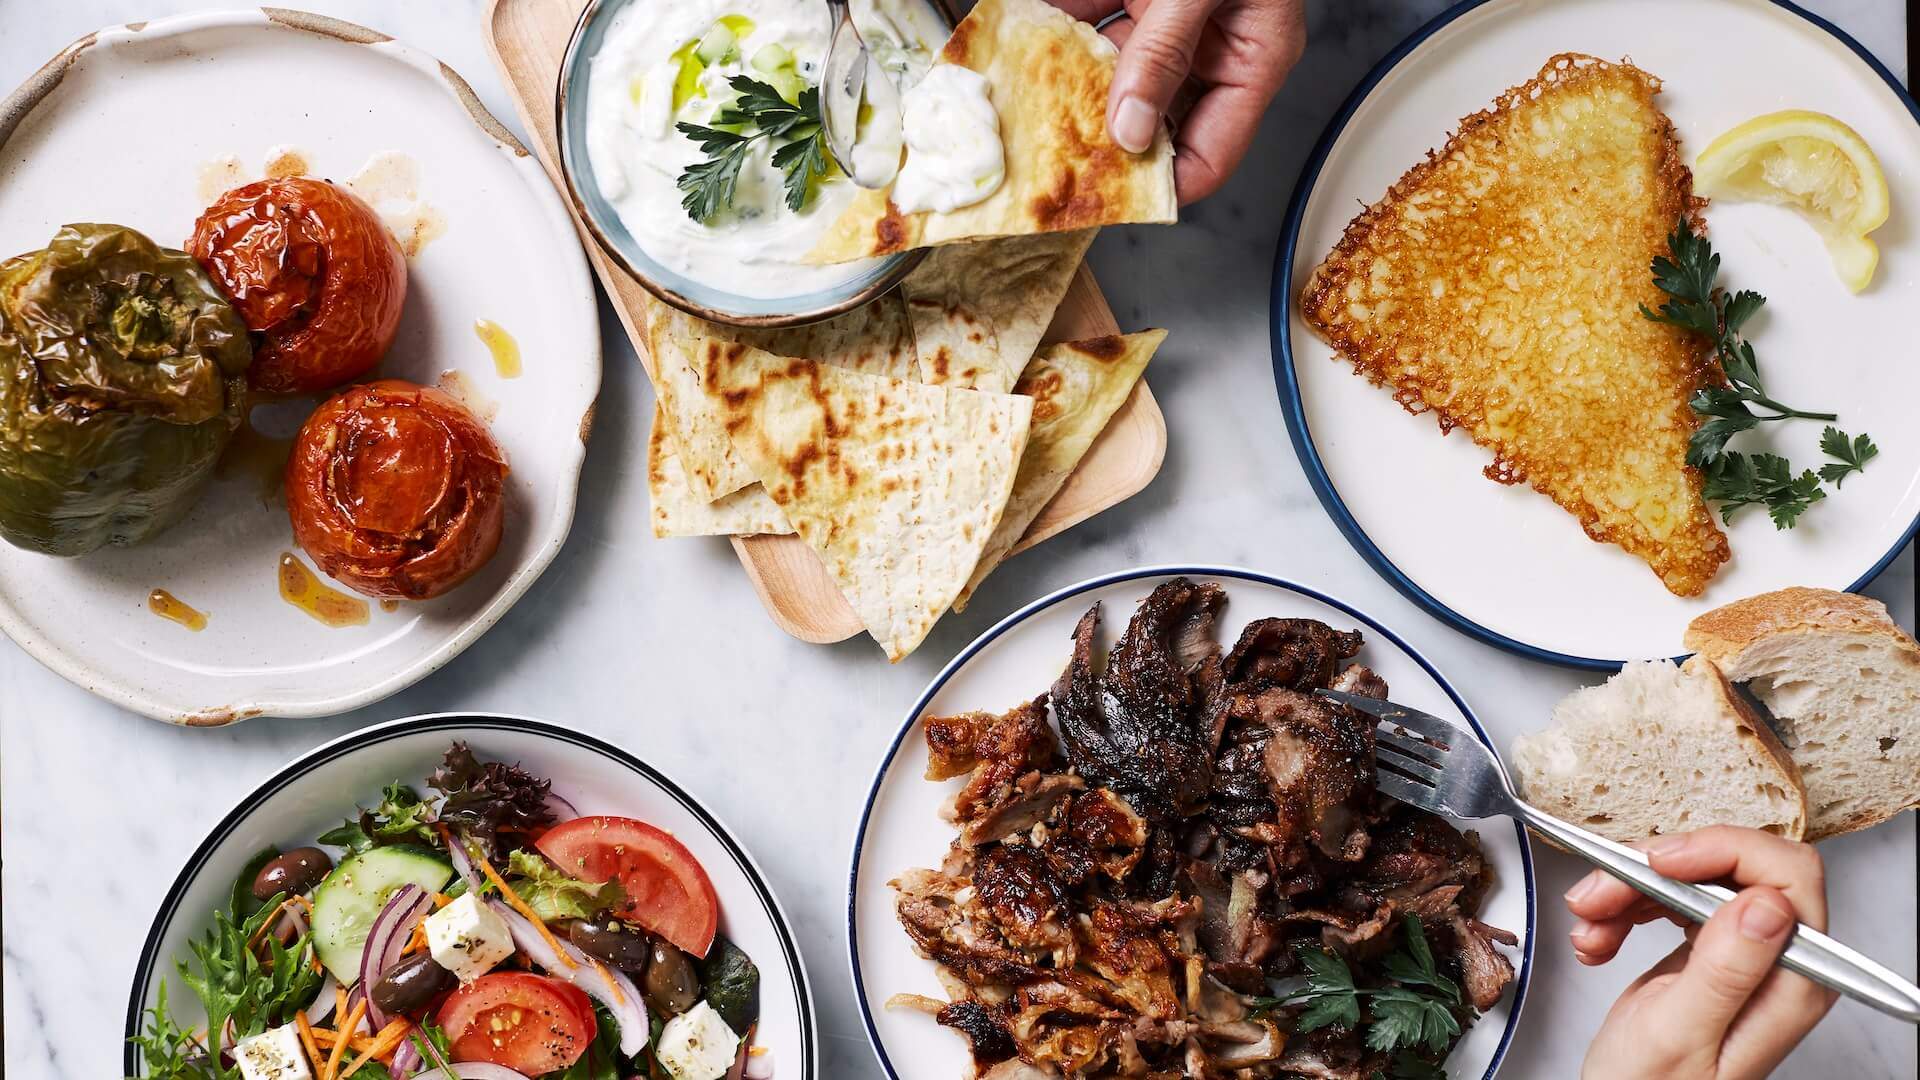 mezze platters at Stalactites - Greek restaurant in Melbourne.